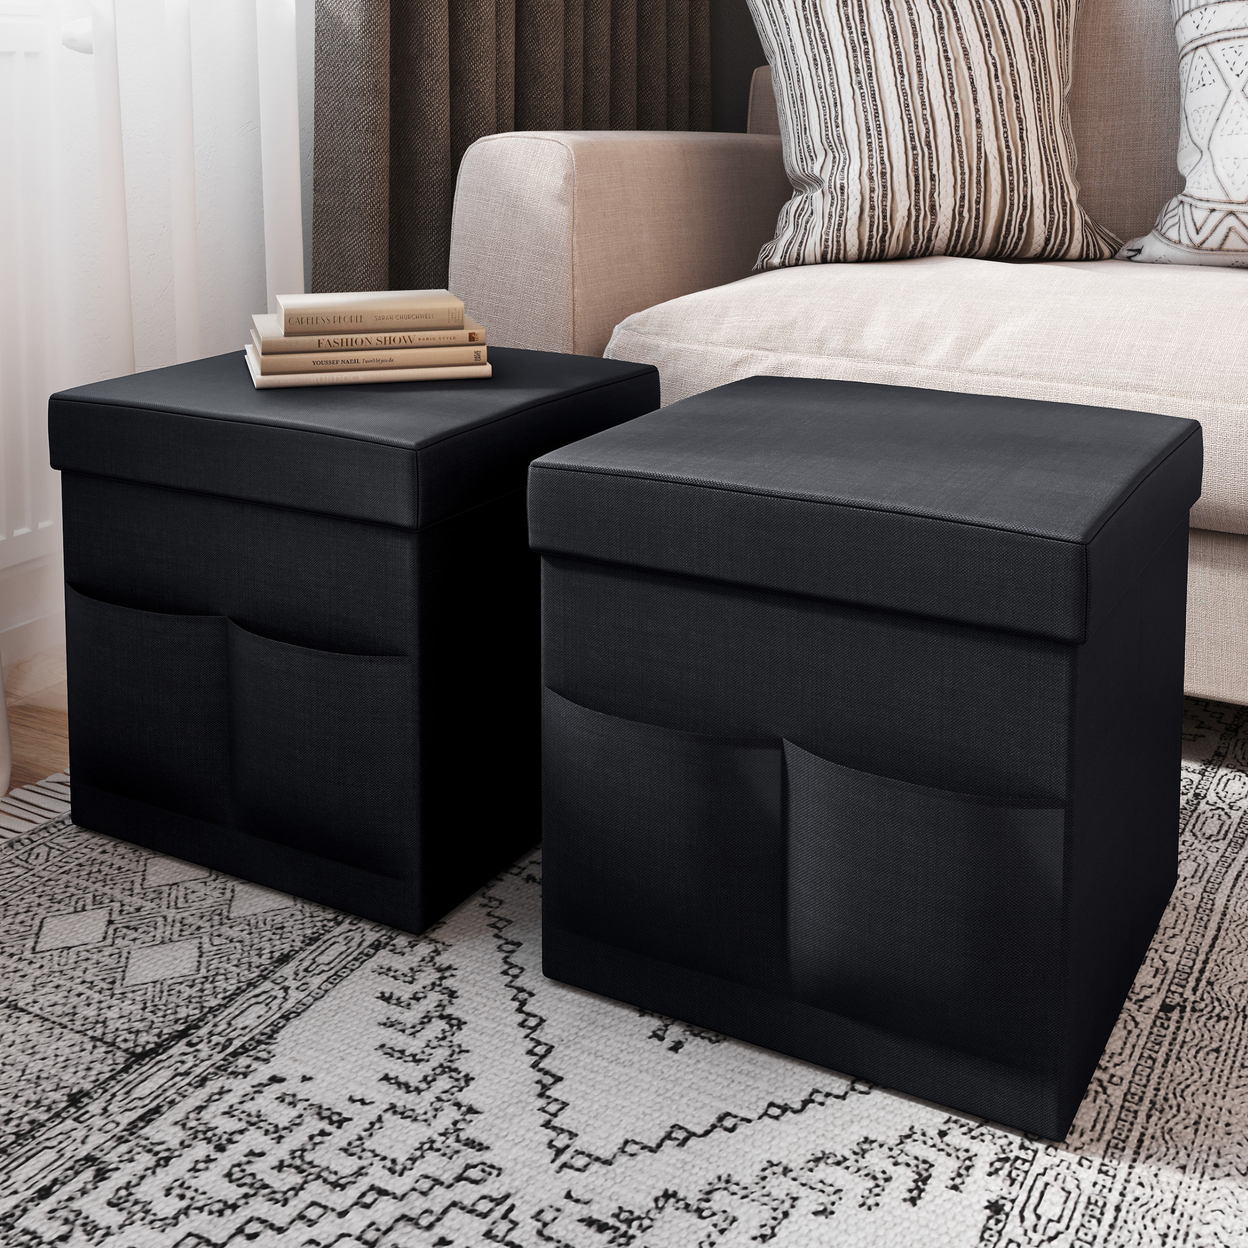 Black Foldable Storage Cube Ottomans With Pockets Livingroom Dorm